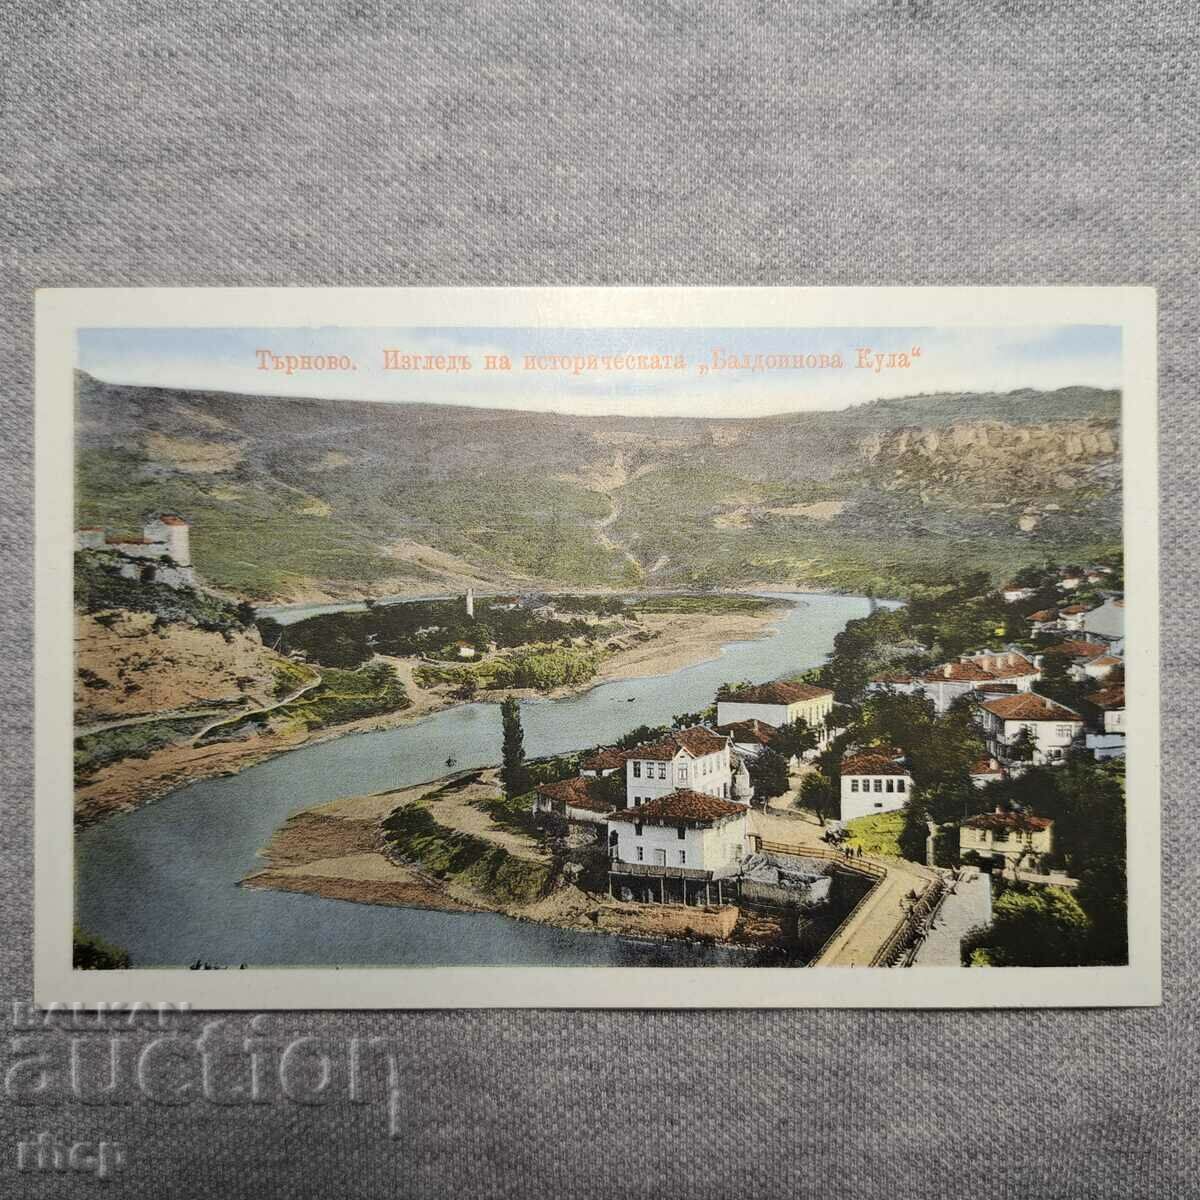 Tarnovo, μια παλιά έγχρωμη κάρτα από τις αρχές του 20ου αιώνα